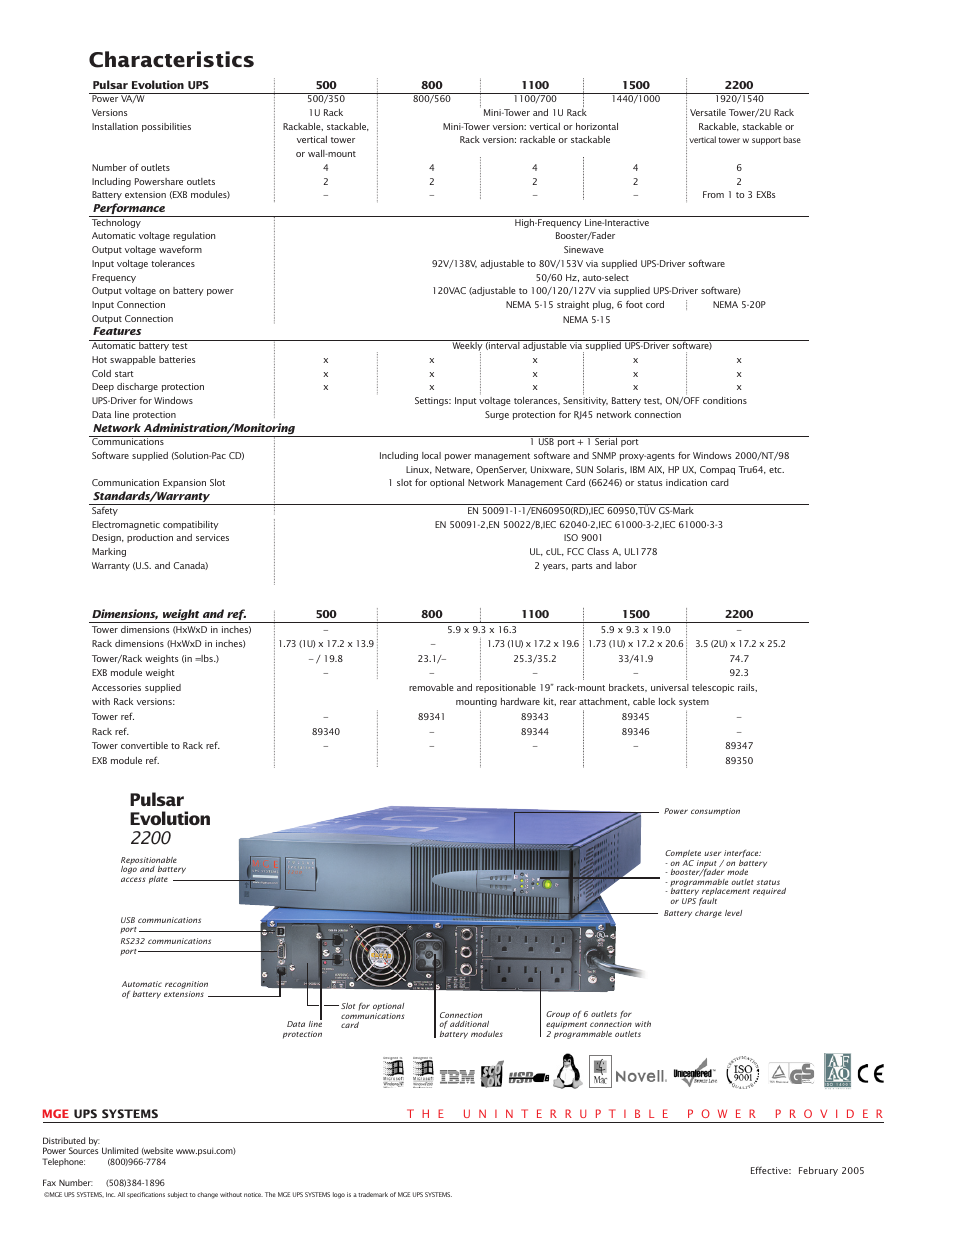 Characteristics, Pulsar evolution 2200 | MGE UPS Systems 500 User Manual |  Page 4 / 4 | Original mode